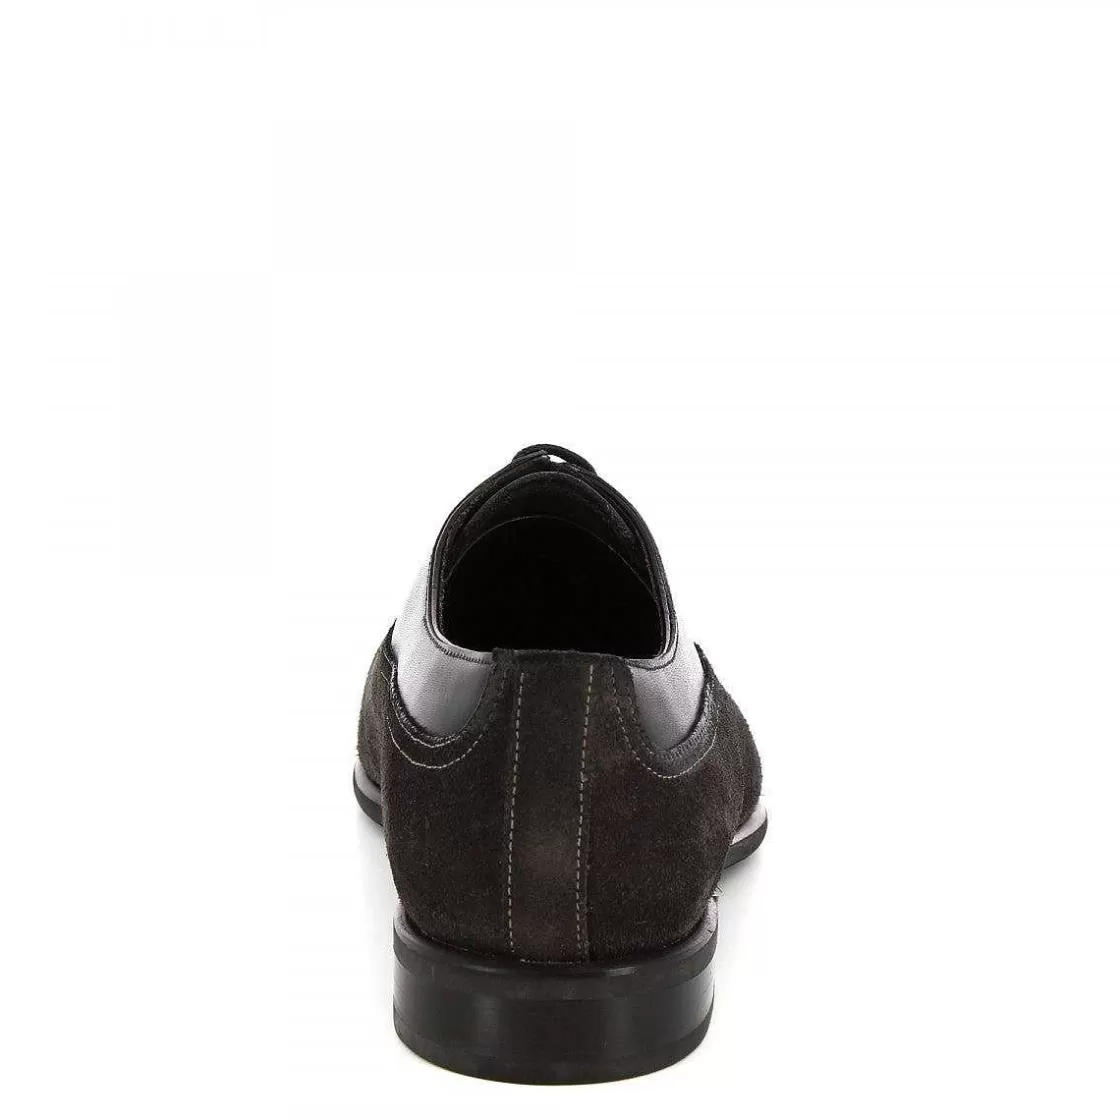 Leonardo Handmade Oxford Shoes For Men In Black Calfskin And Suede Hot